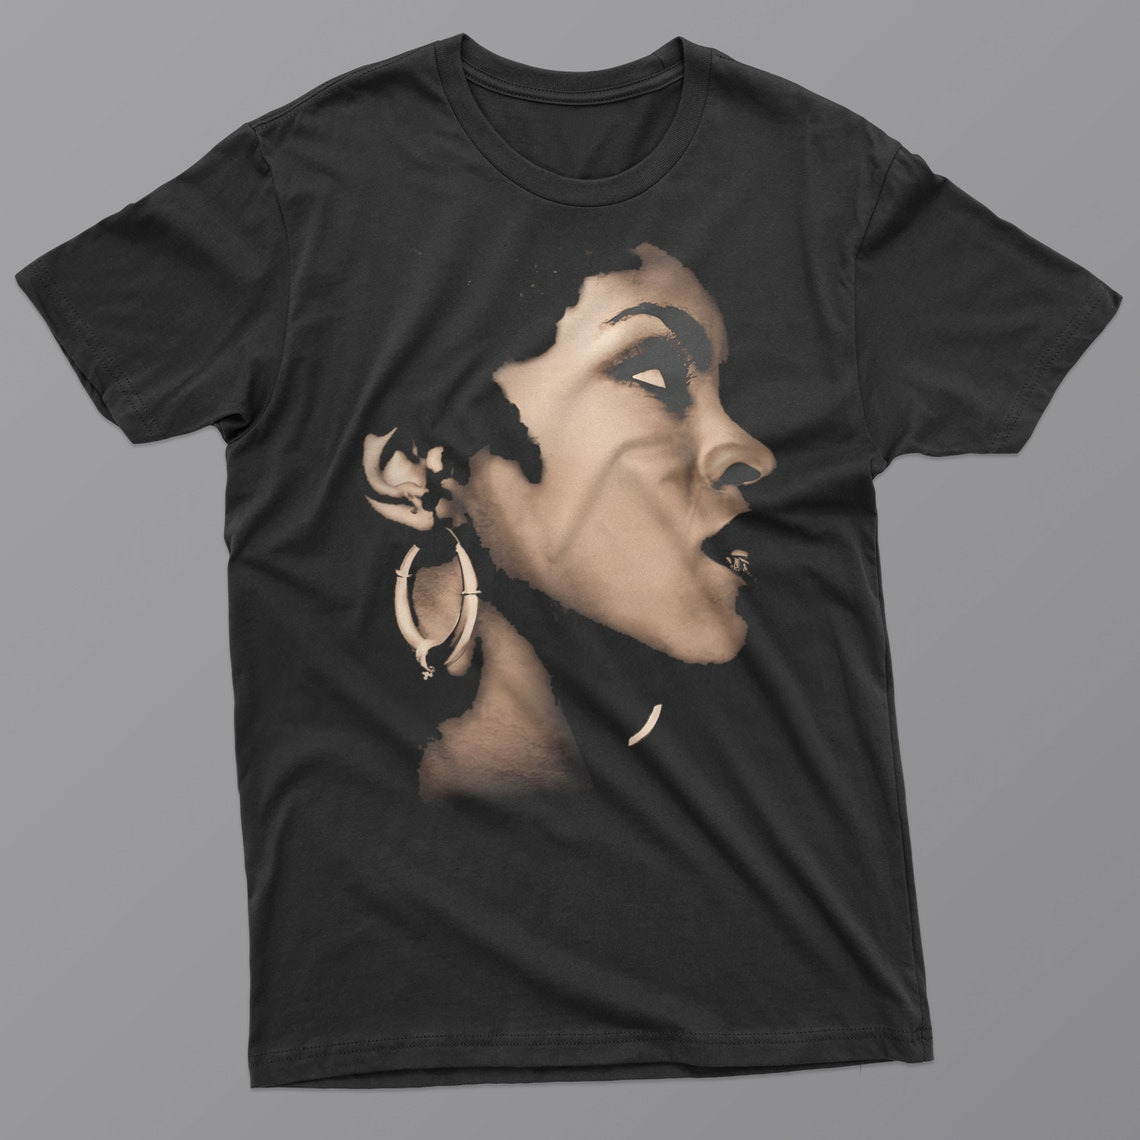 Exotic Lauryn Hill T-Shirt Full Size